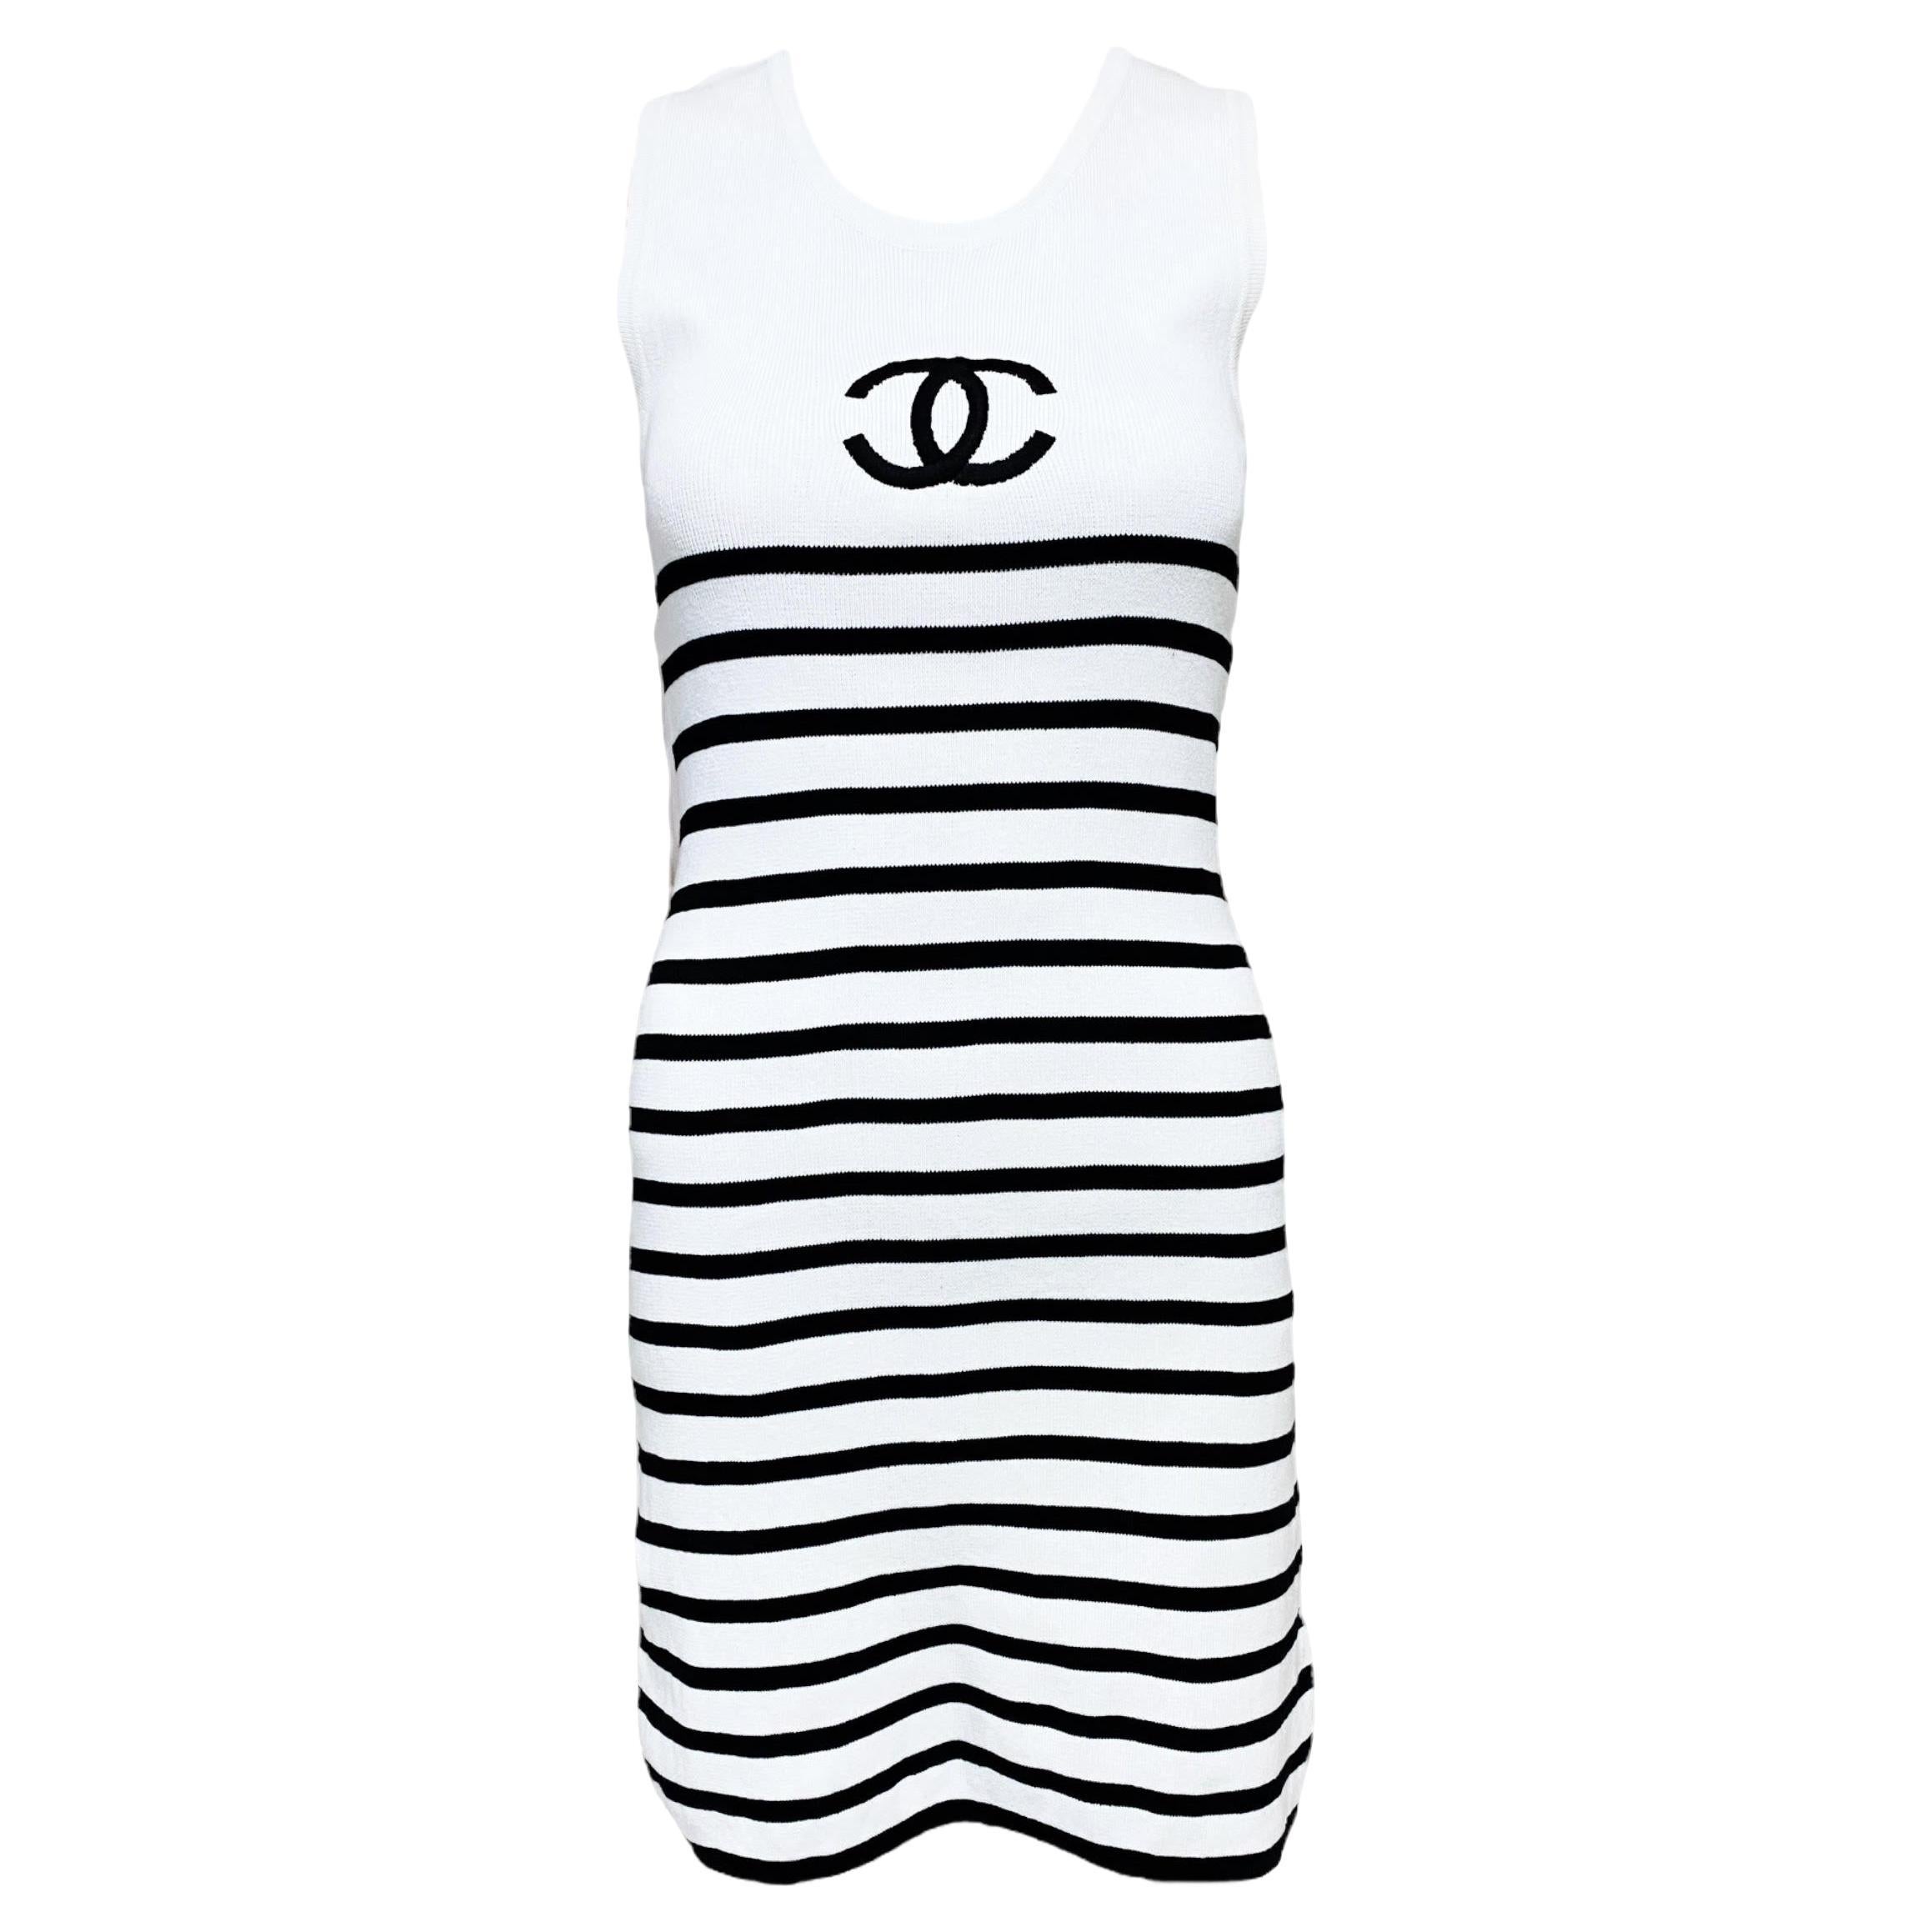 Christy Turlington: CHANEL  Christy turlington, Vintage chanel dress, Chanel  gown